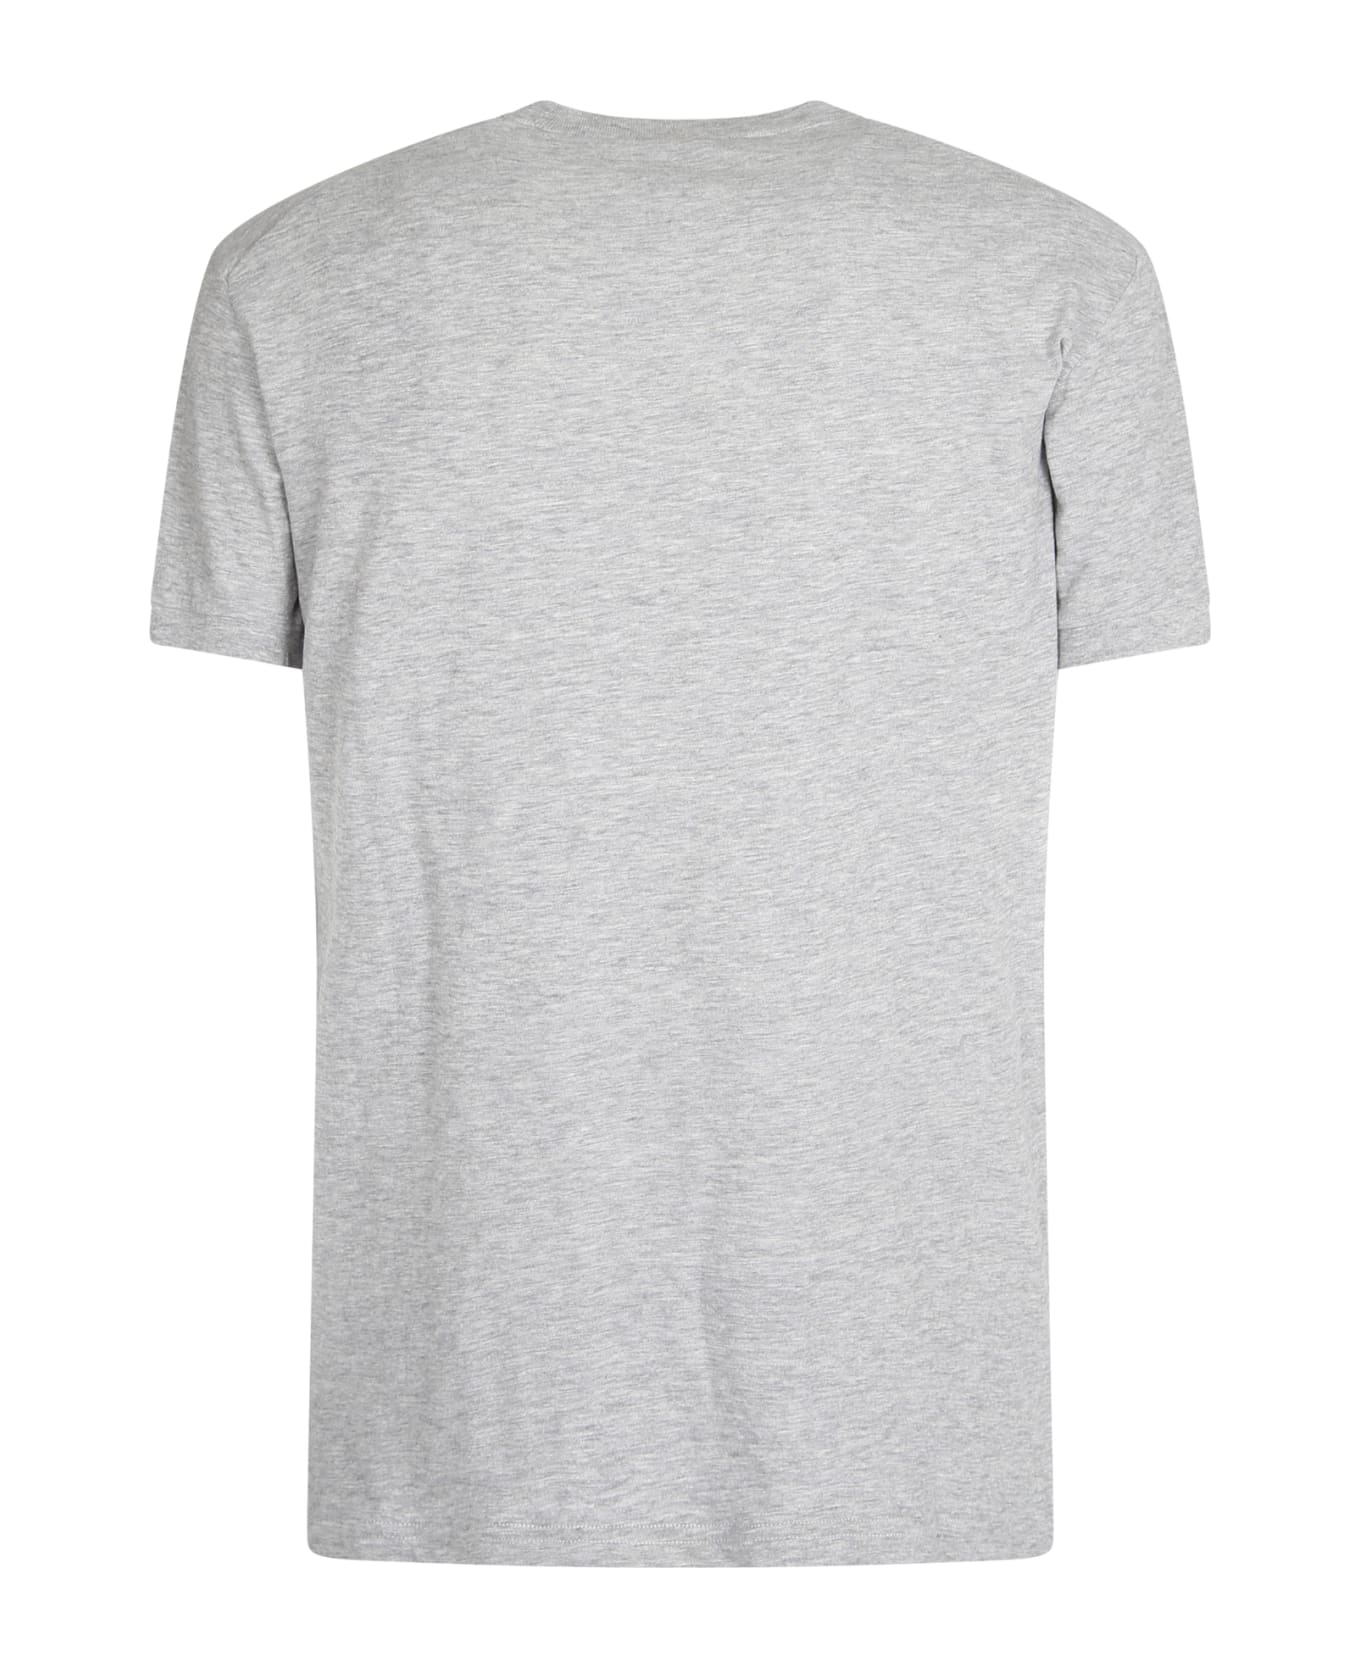 Dsquared2 Printed T-shirt - Grey